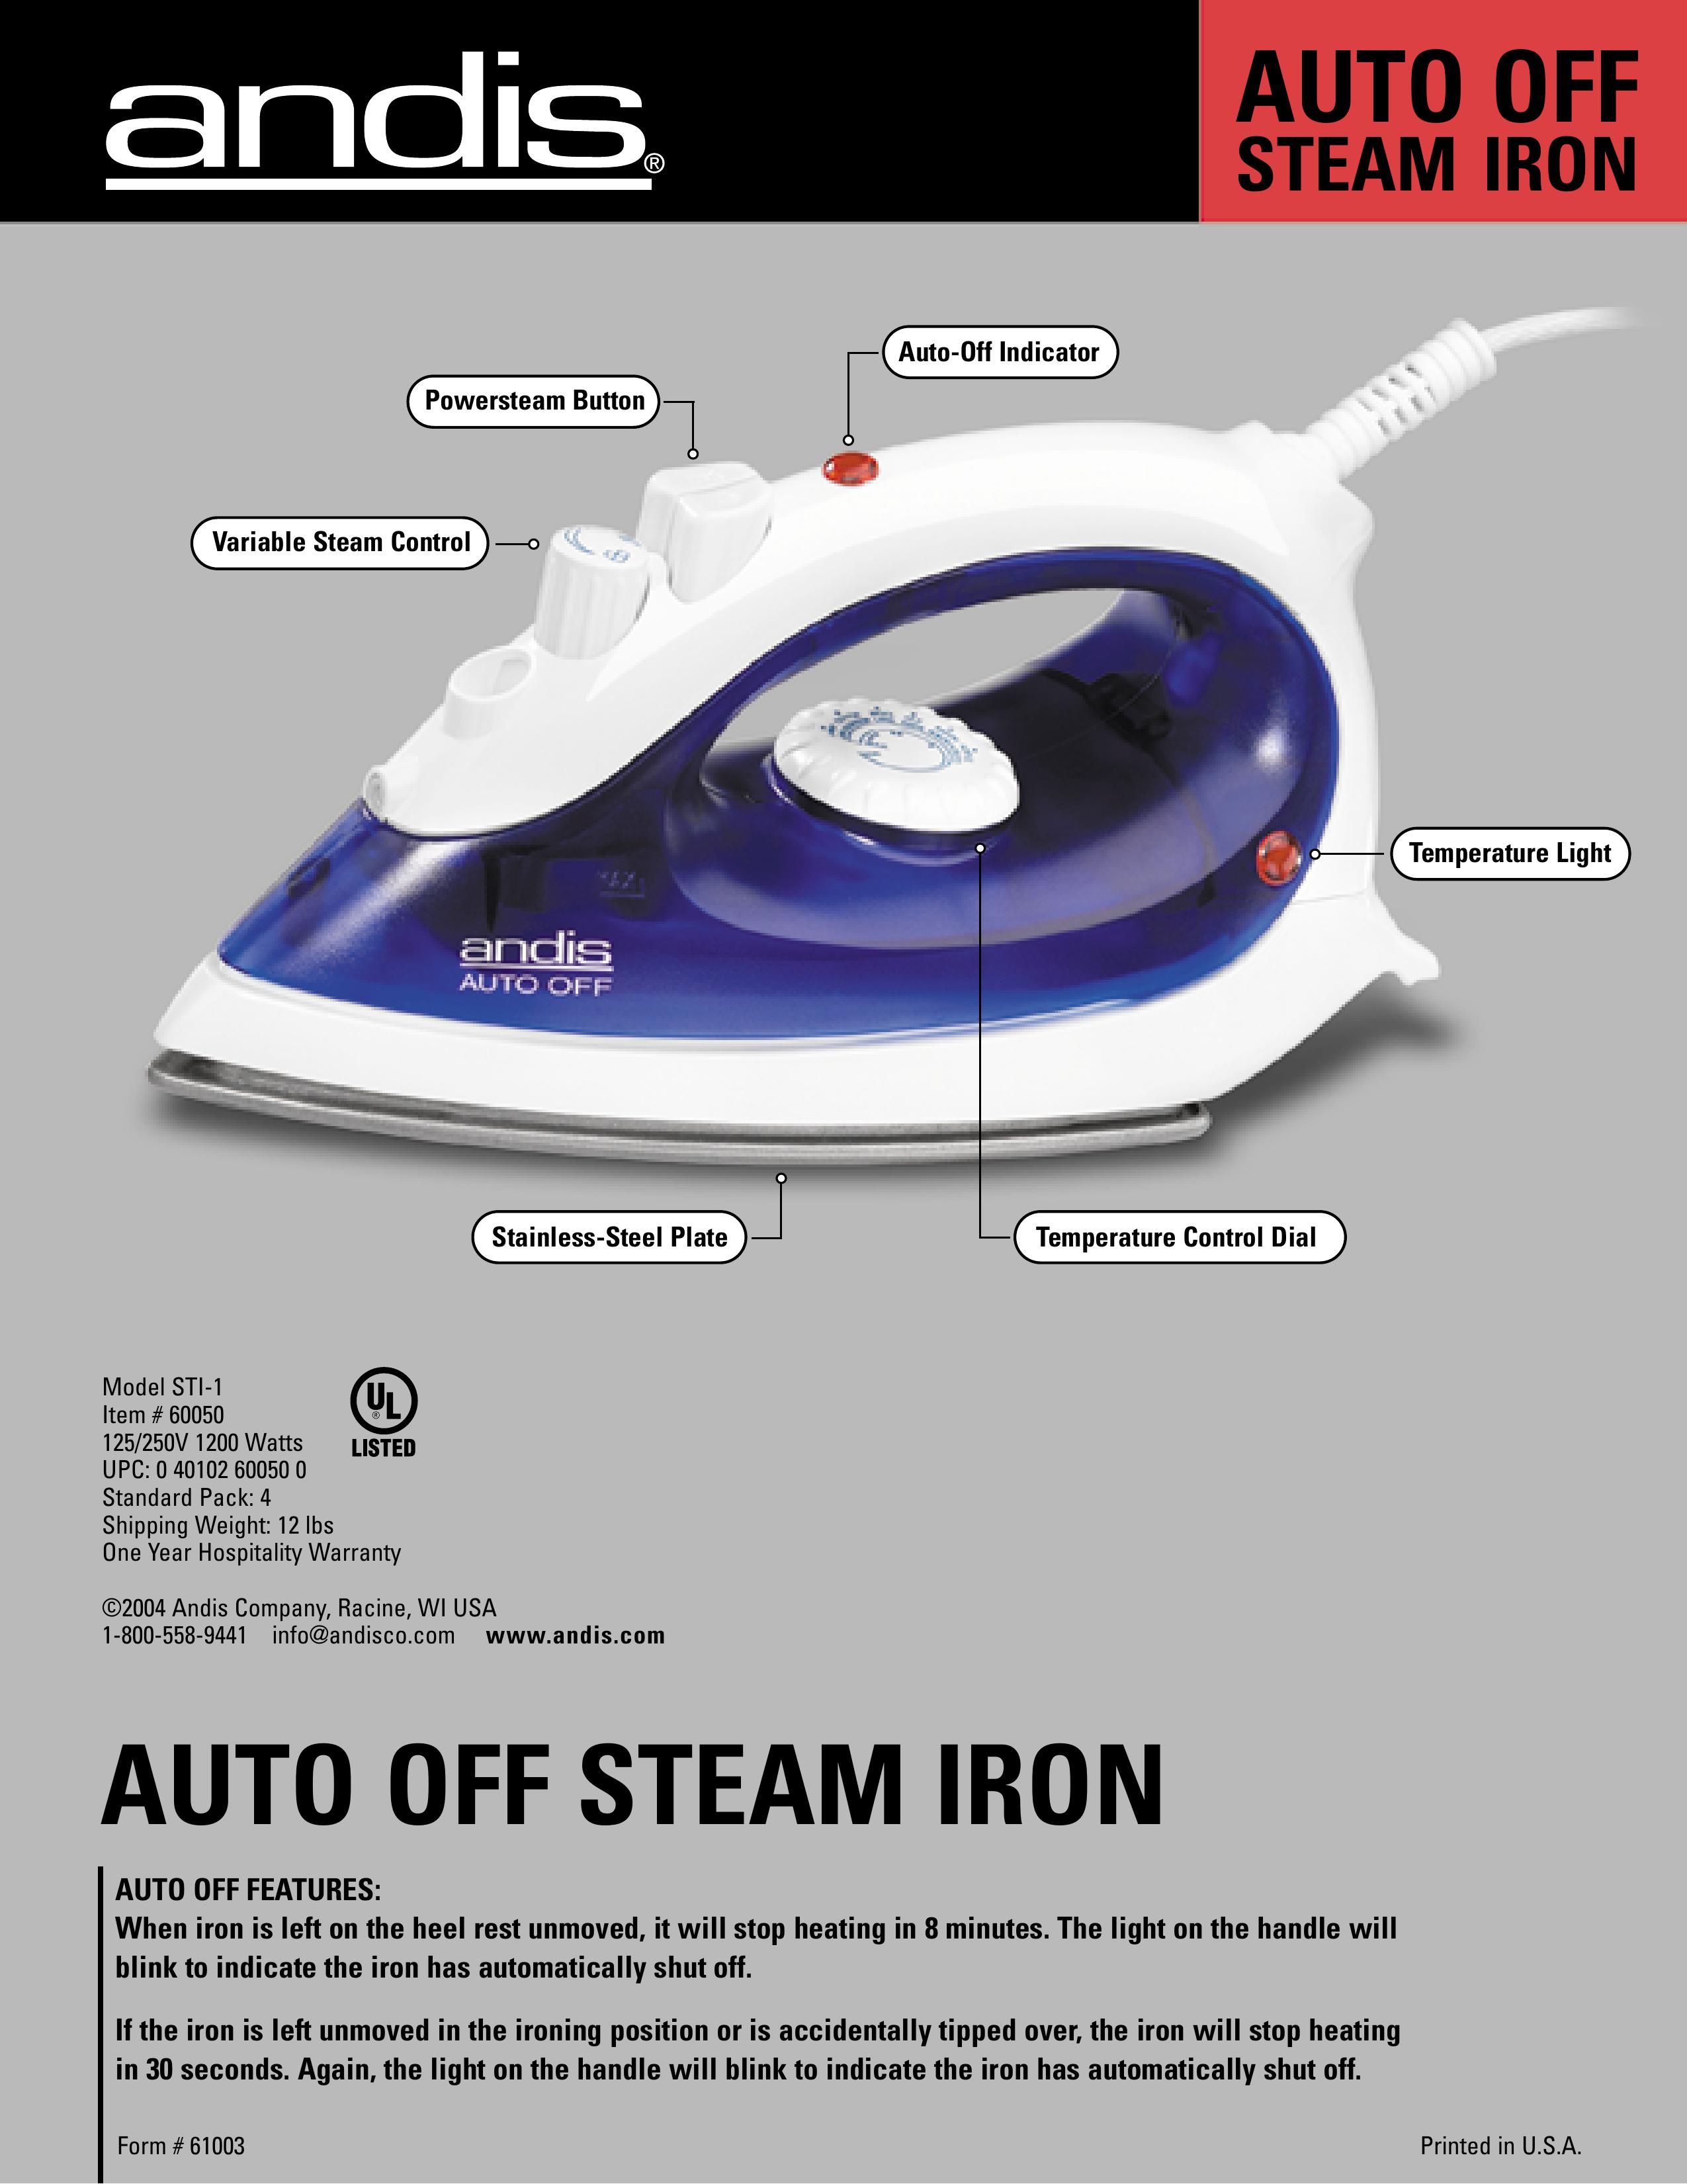 Andis Company STI-1 Iron User Manual (Page 1)